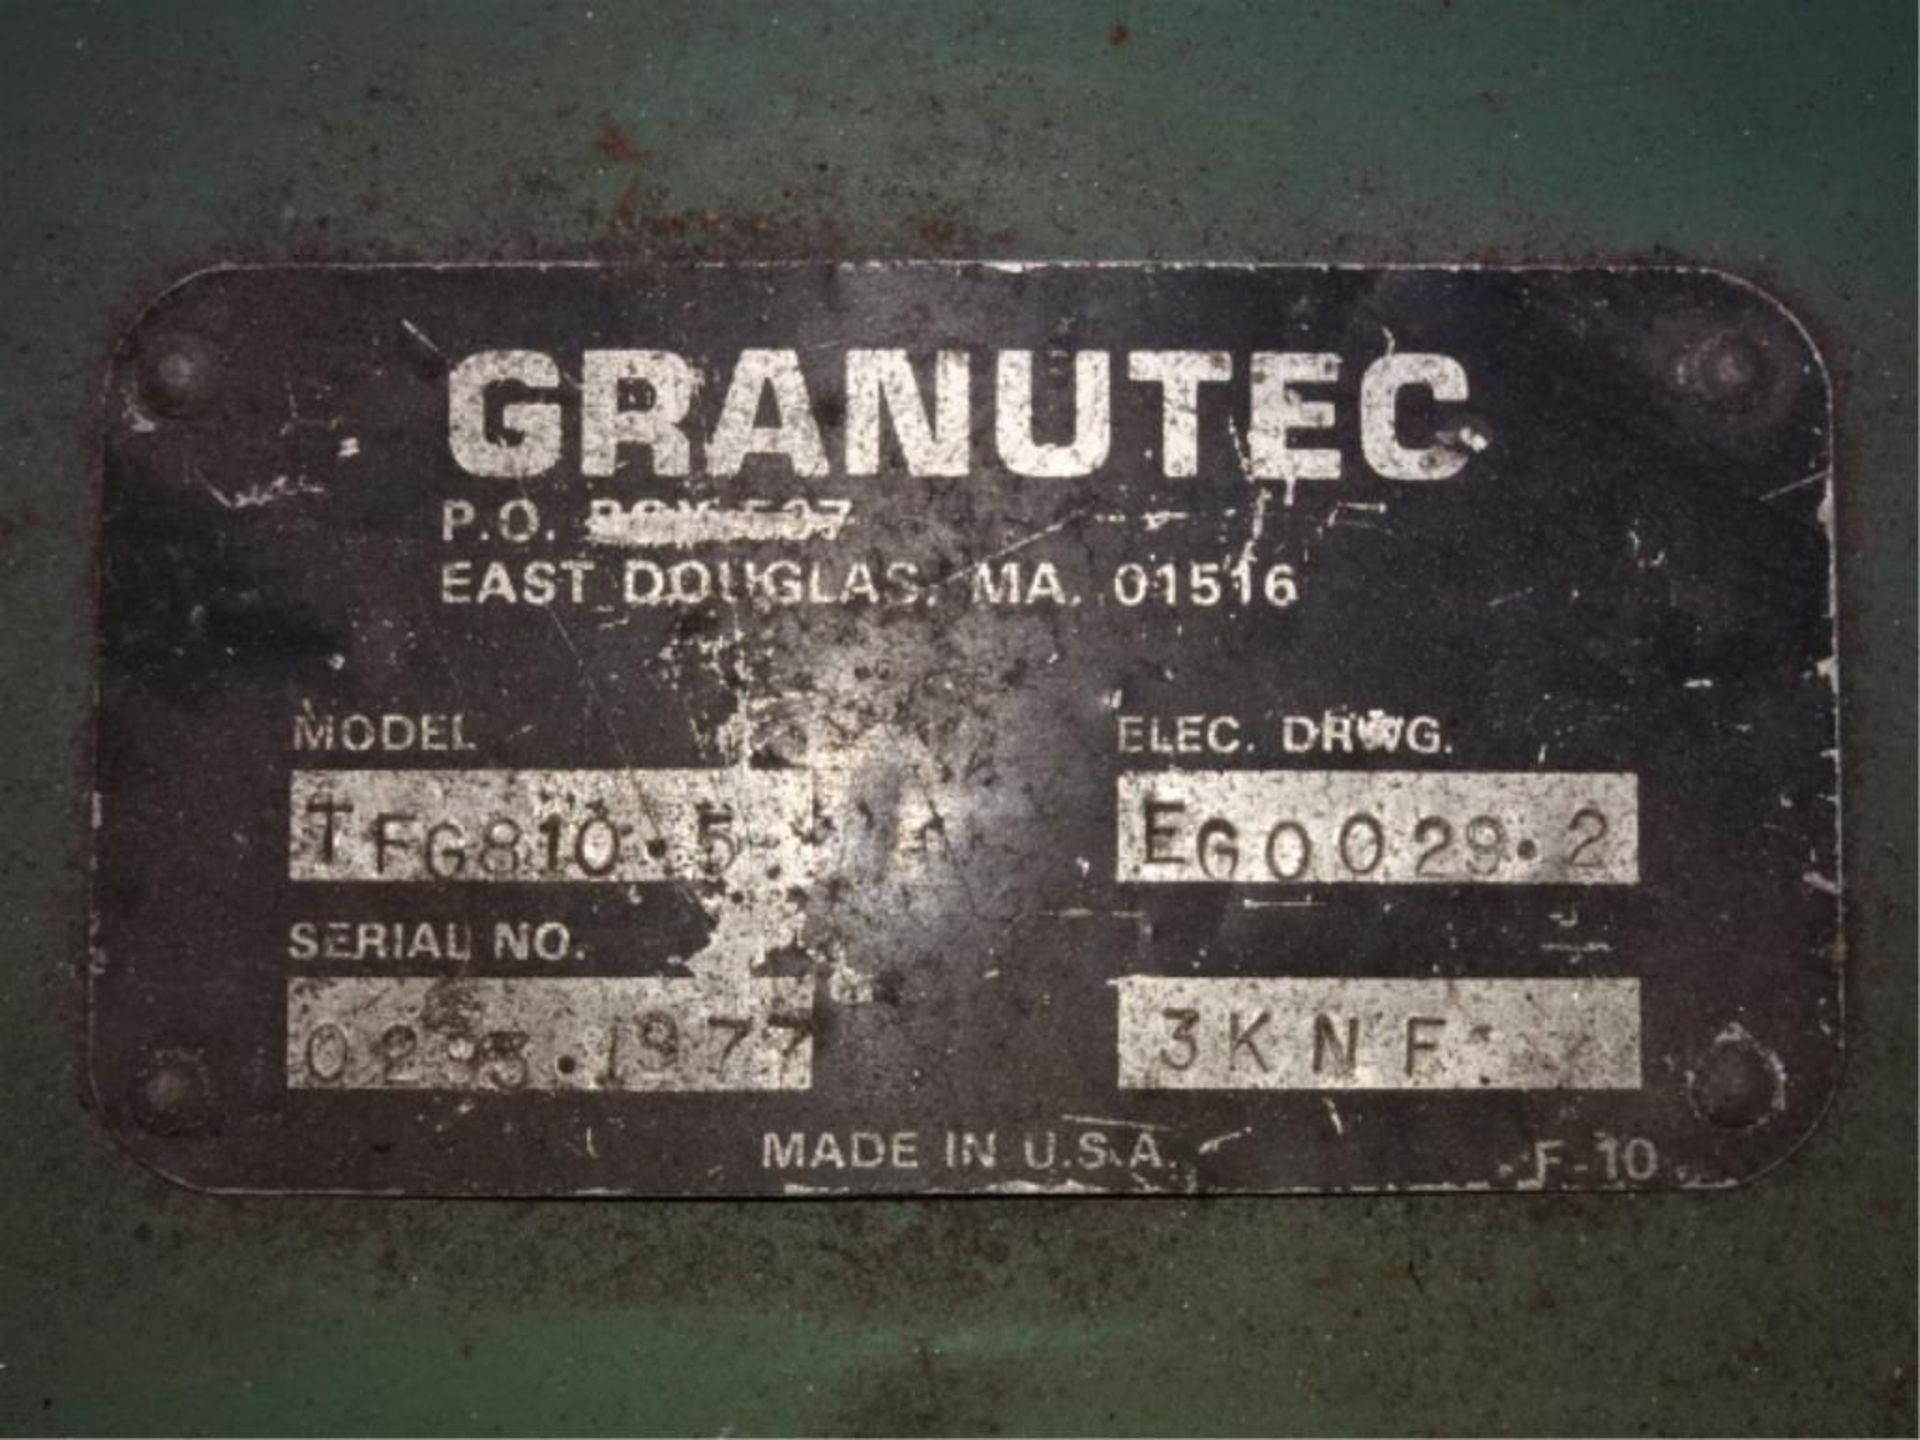 Grautec Granulator - Image 2 of 2